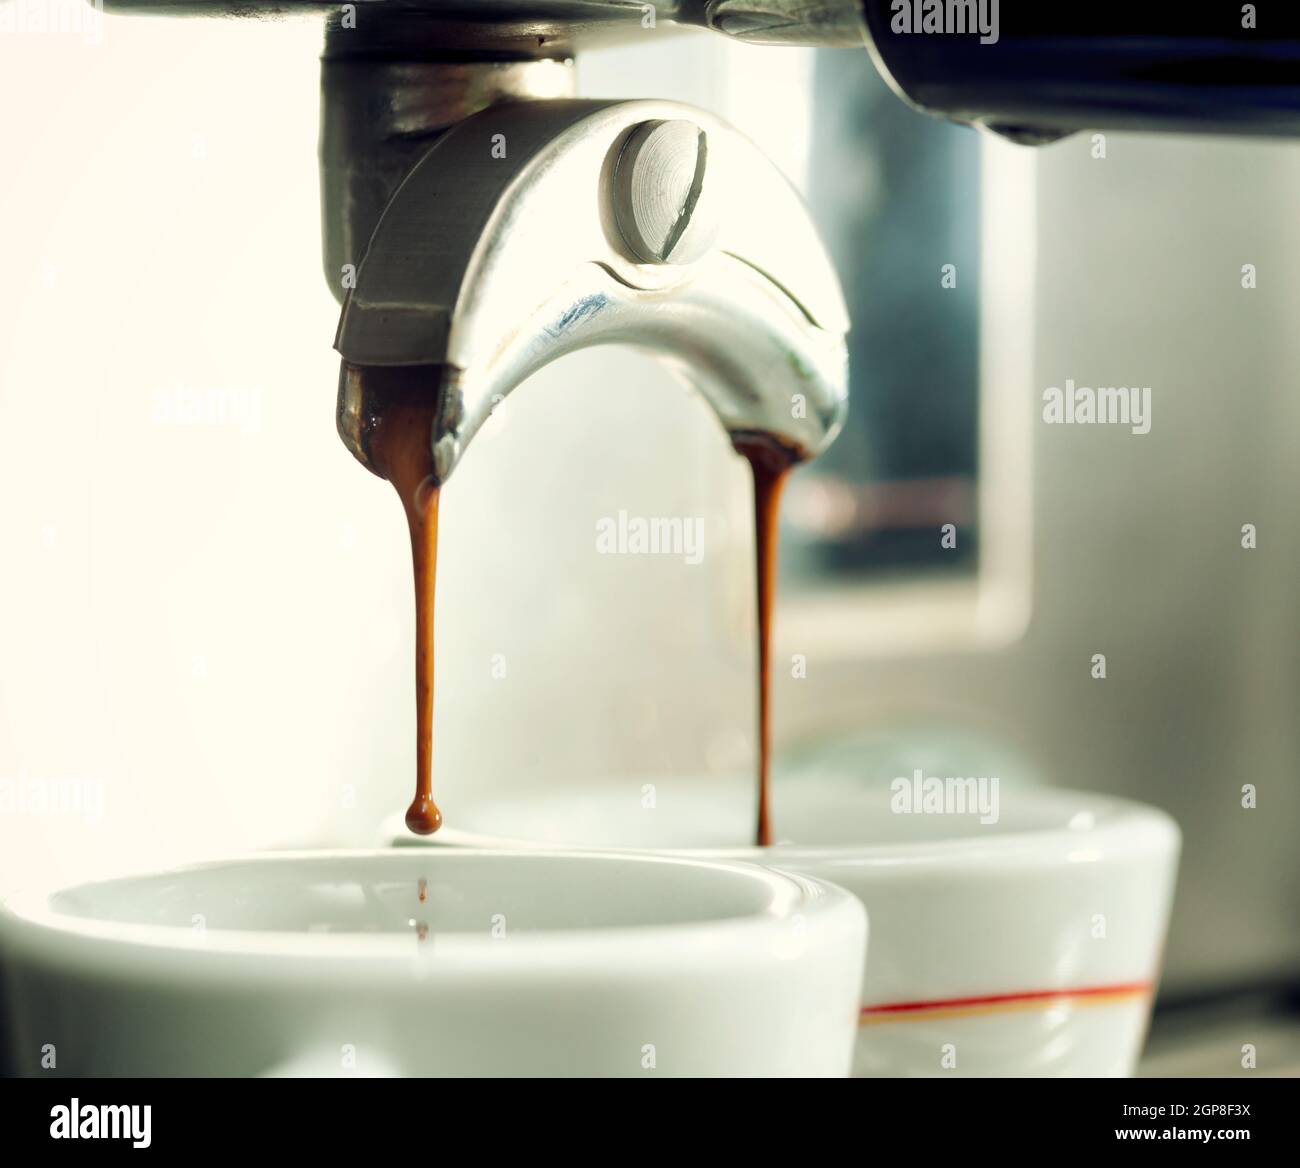 https://c8.alamy.com/comp/2GP8F3X/close-up-of-an-espresso-machine-making-a-cup-of-coffee-2GP8F3X.jpg